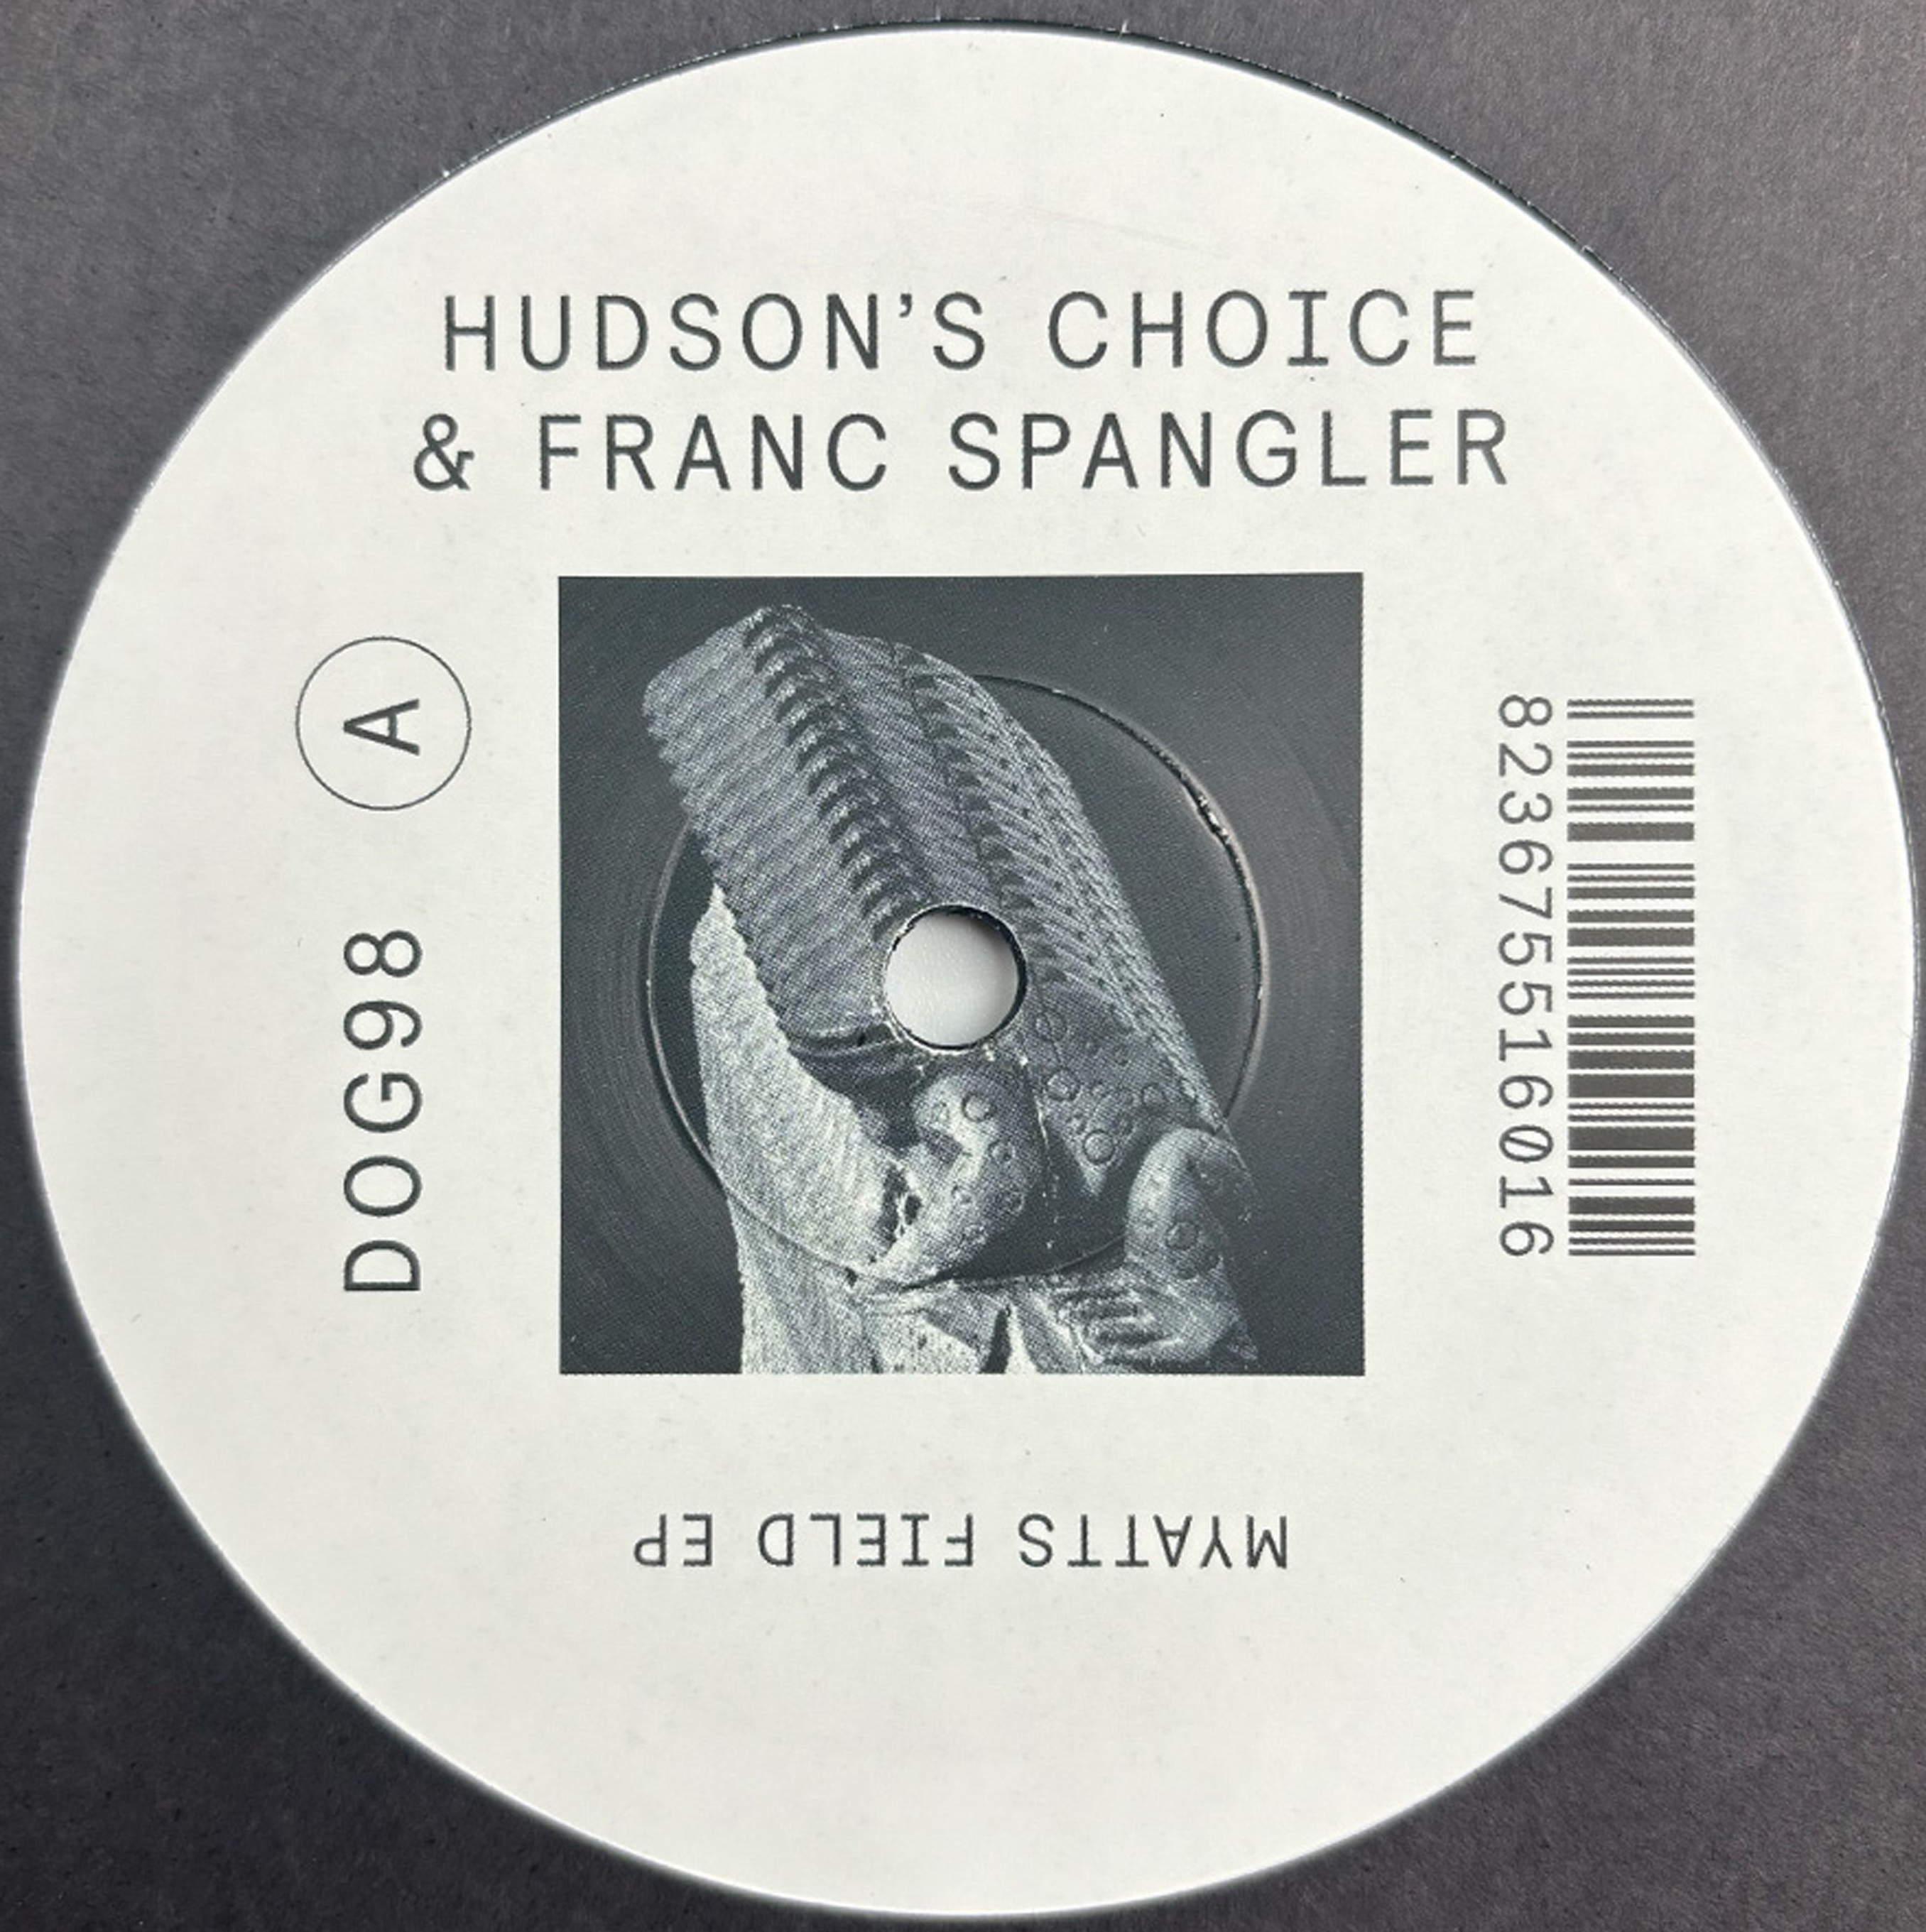 Hudson's Choice & Franc Spangler – Myatts Field EP